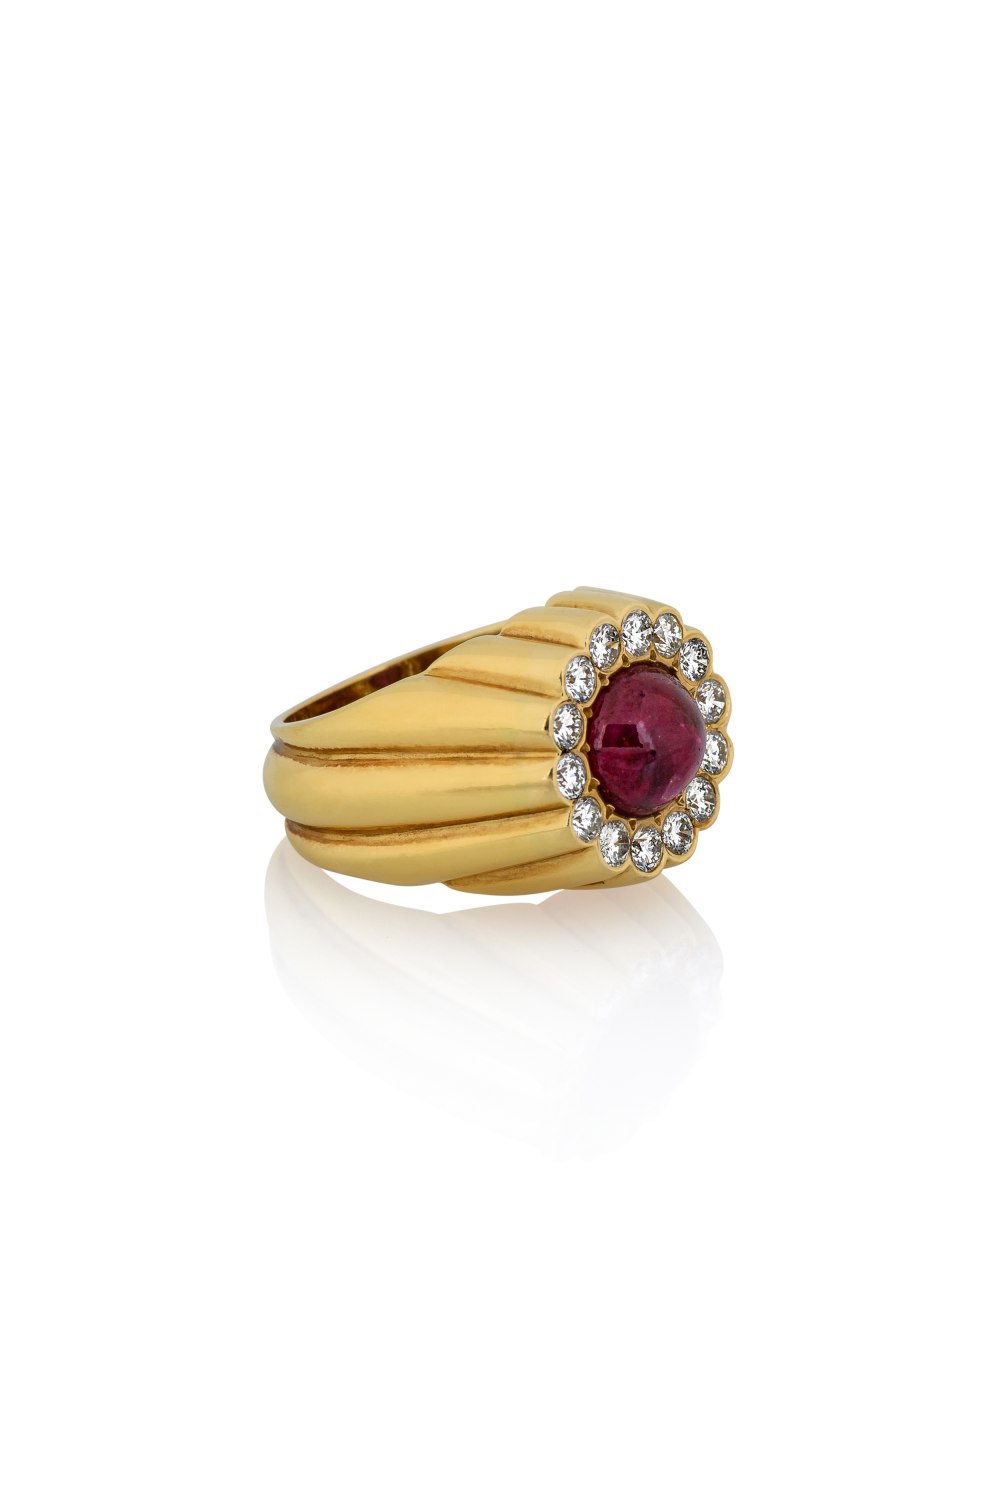 KESSARIS - Vintage Ruby Diamond Ring